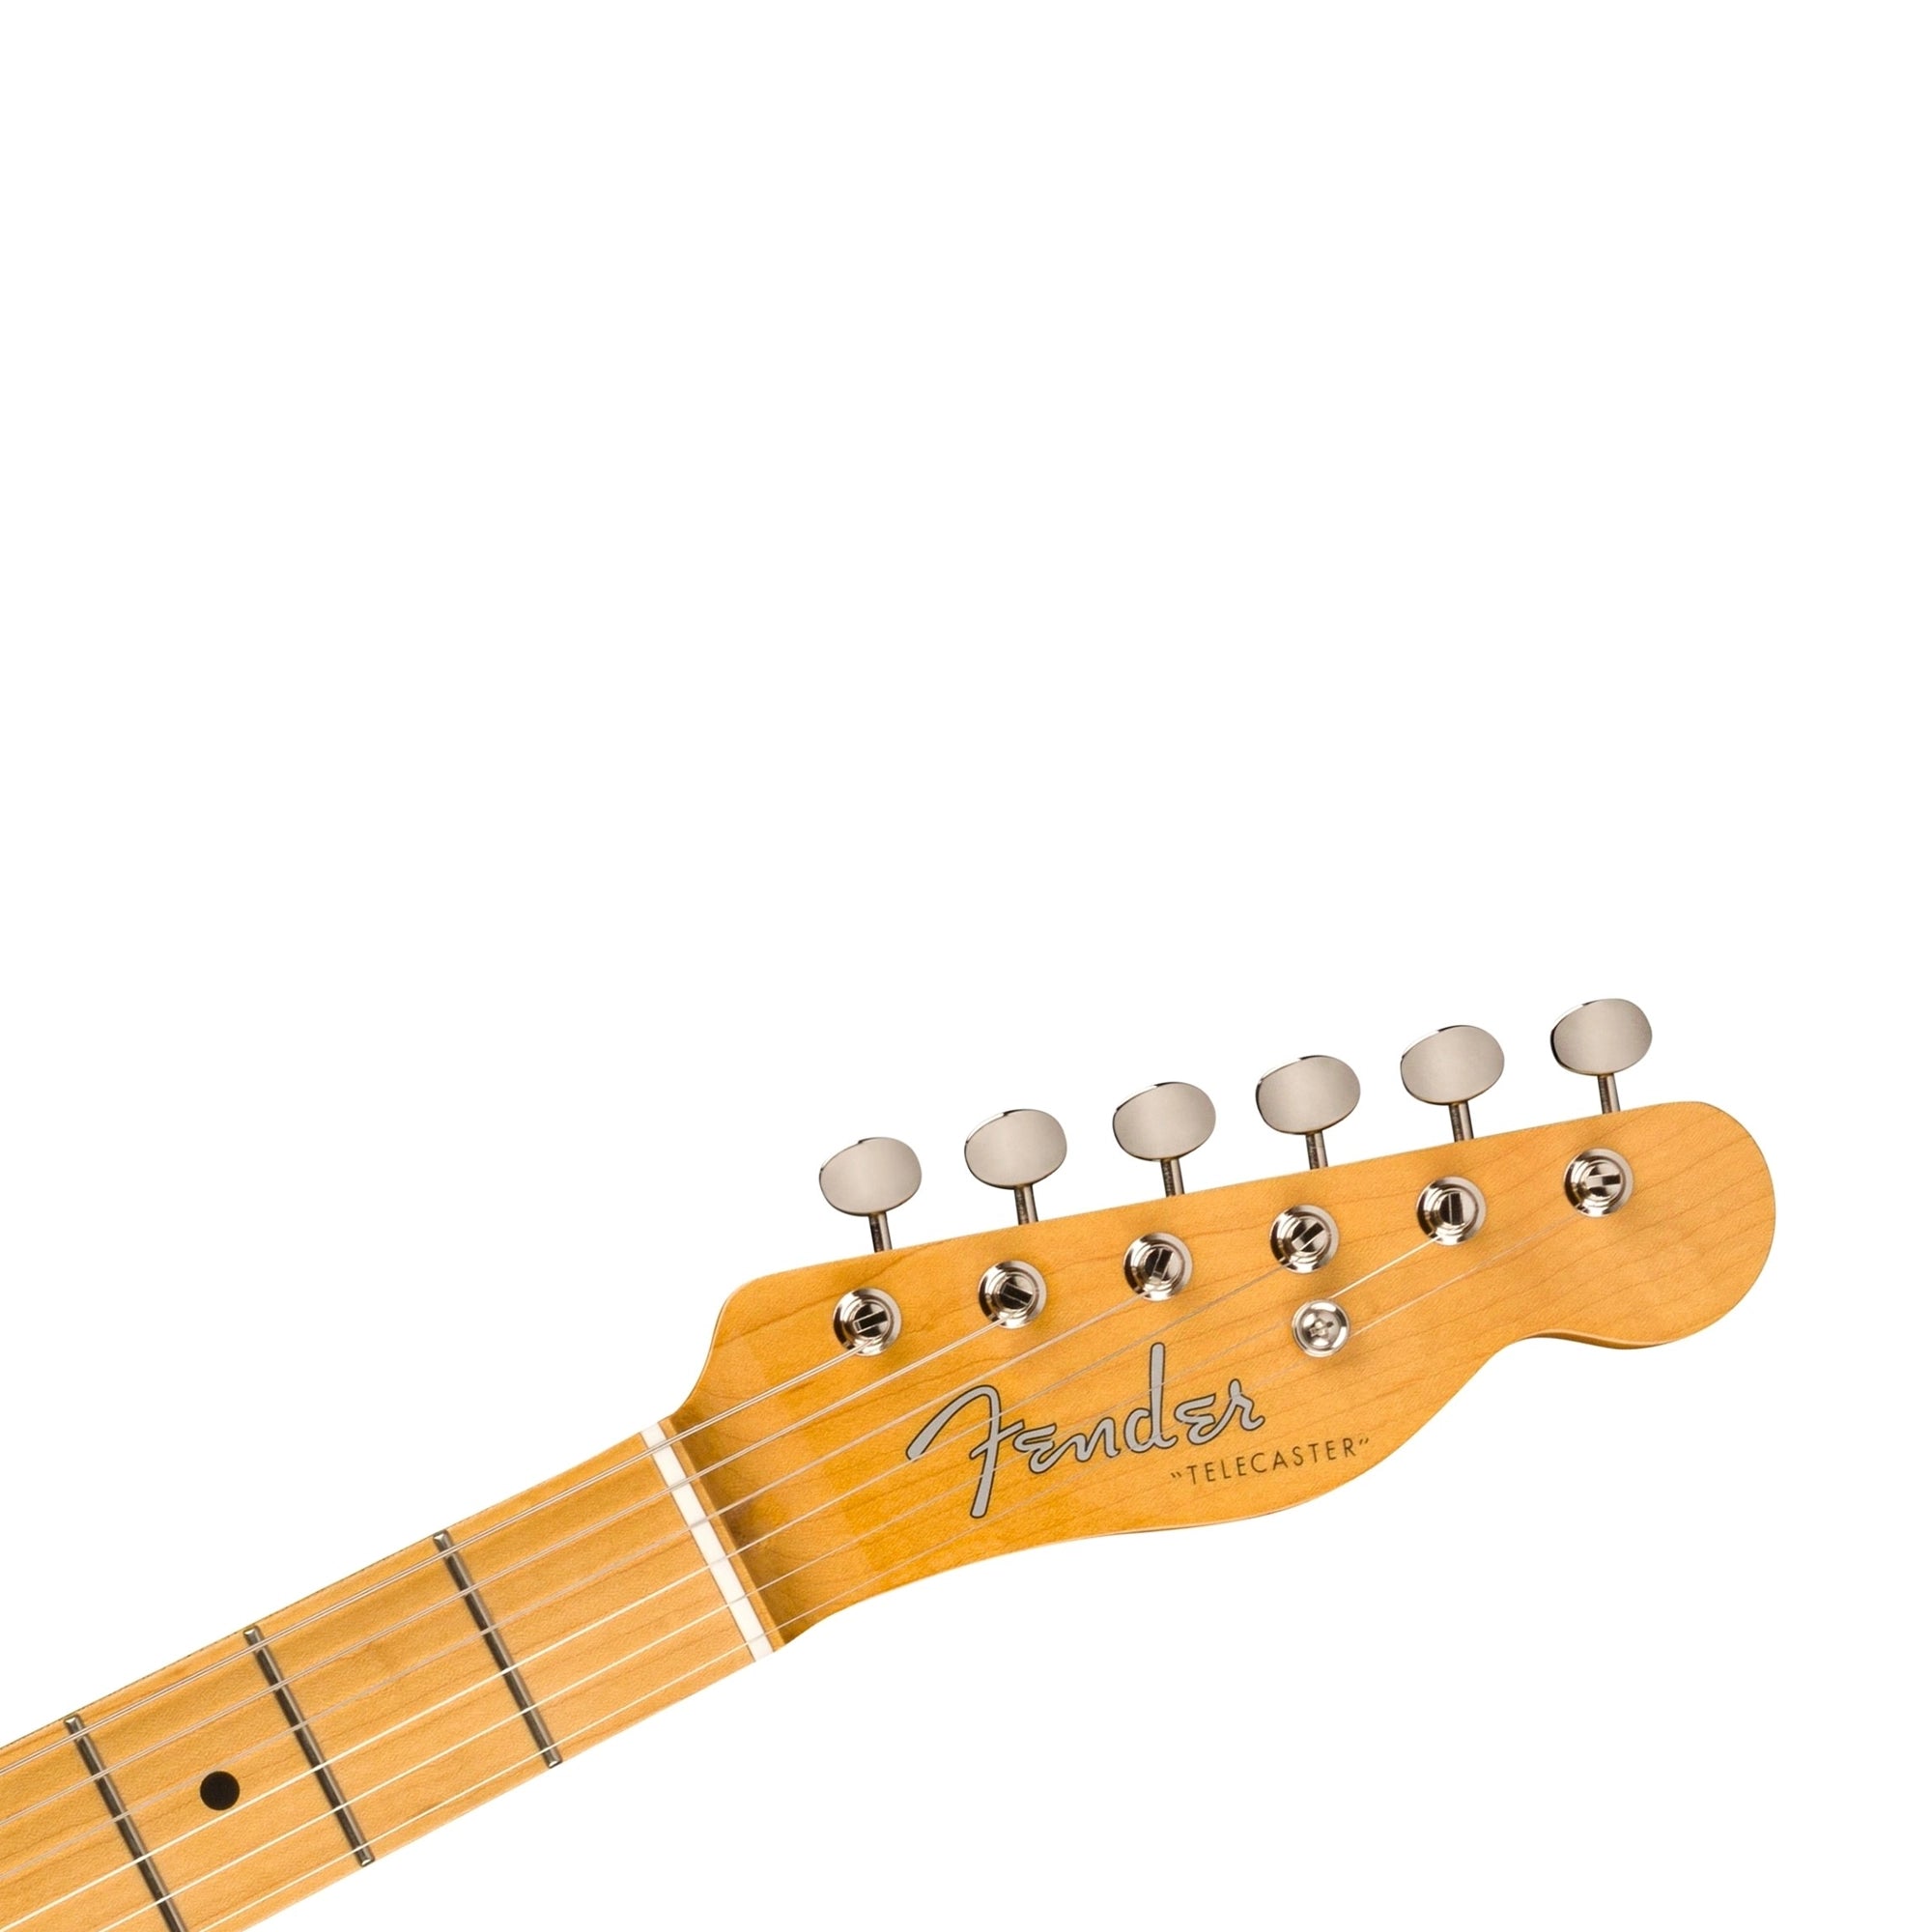 Fender Jv Modified '50s Telecaster Electric Guitar - White Blonde